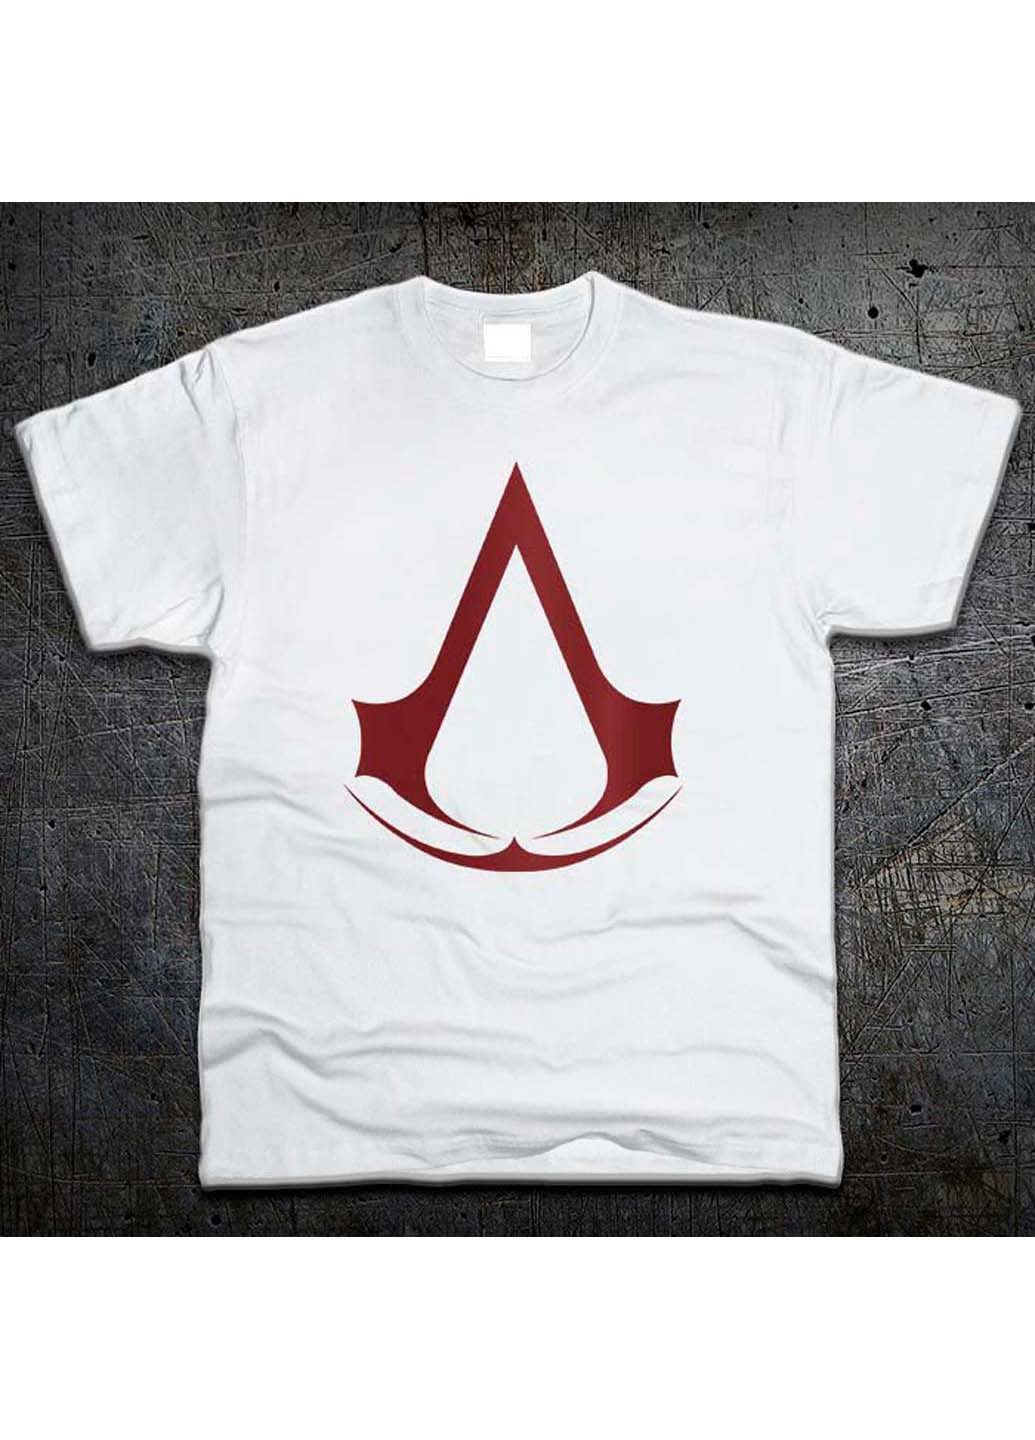 Біла футболка лого кредо ассасіна logo assassins creed Fruit of the Loom